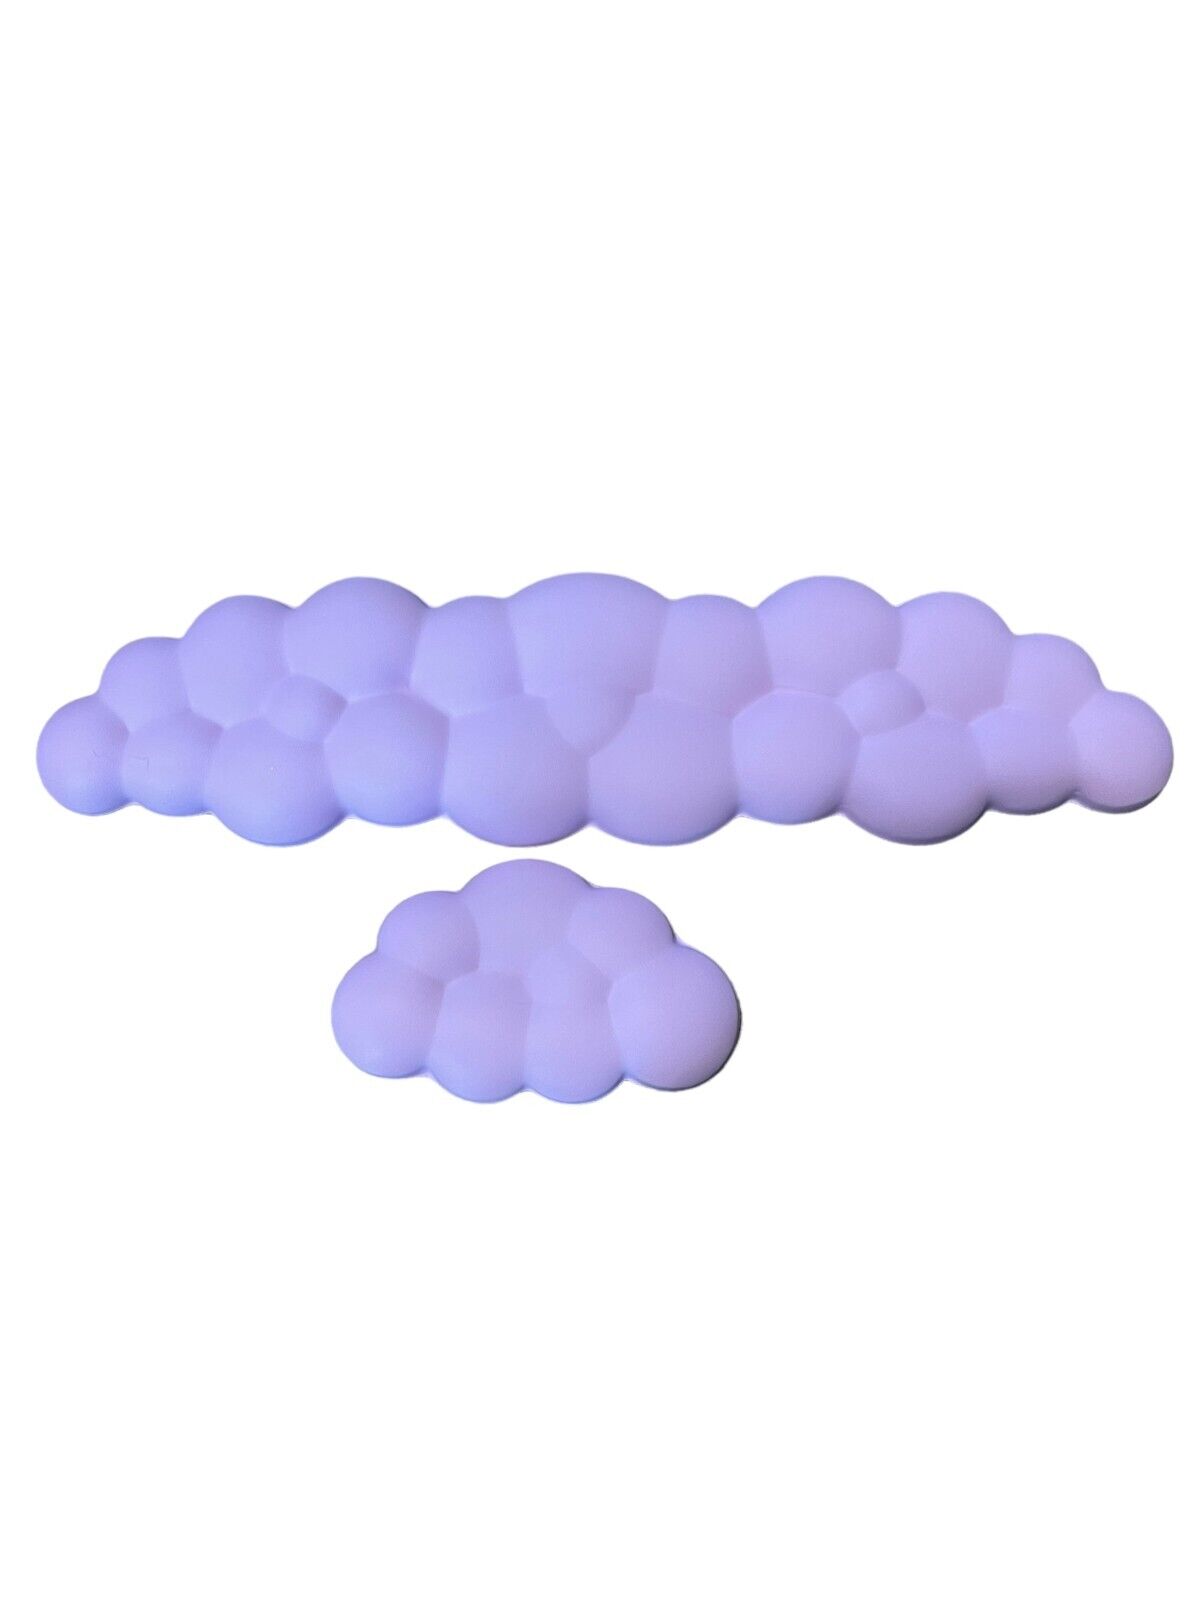 Keyboard Cloud Wrist Rest Pad Cloud Mouse Arm Wrist Cute Memory Foam Pink 2 Pcs